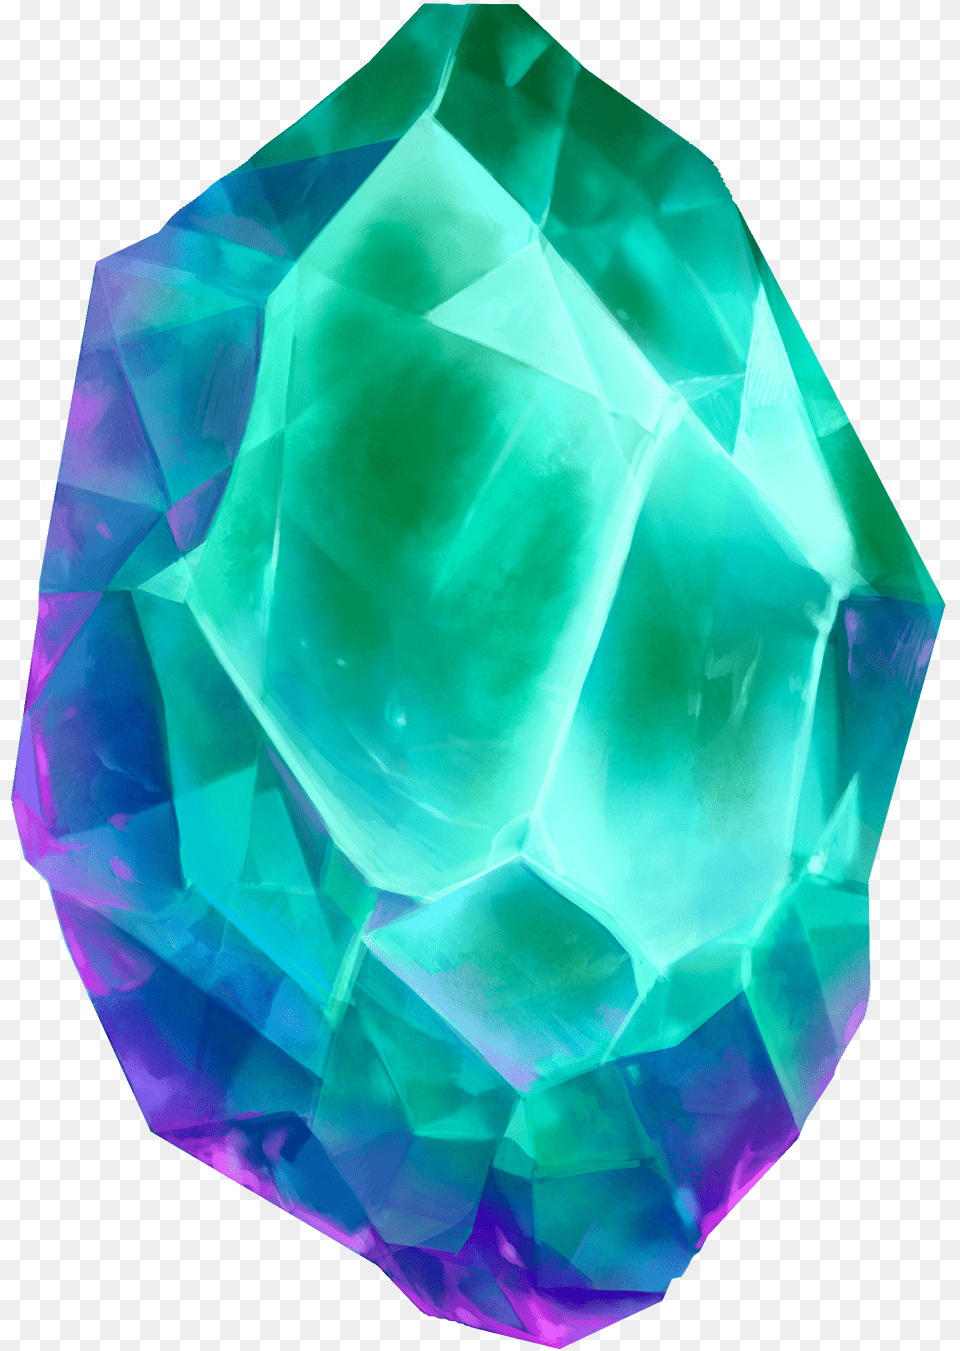 Lol Odyssey Gem Download League Of Legends Gemstones, Accessories, Crystal, Mineral, Gemstone Free Transparent Png